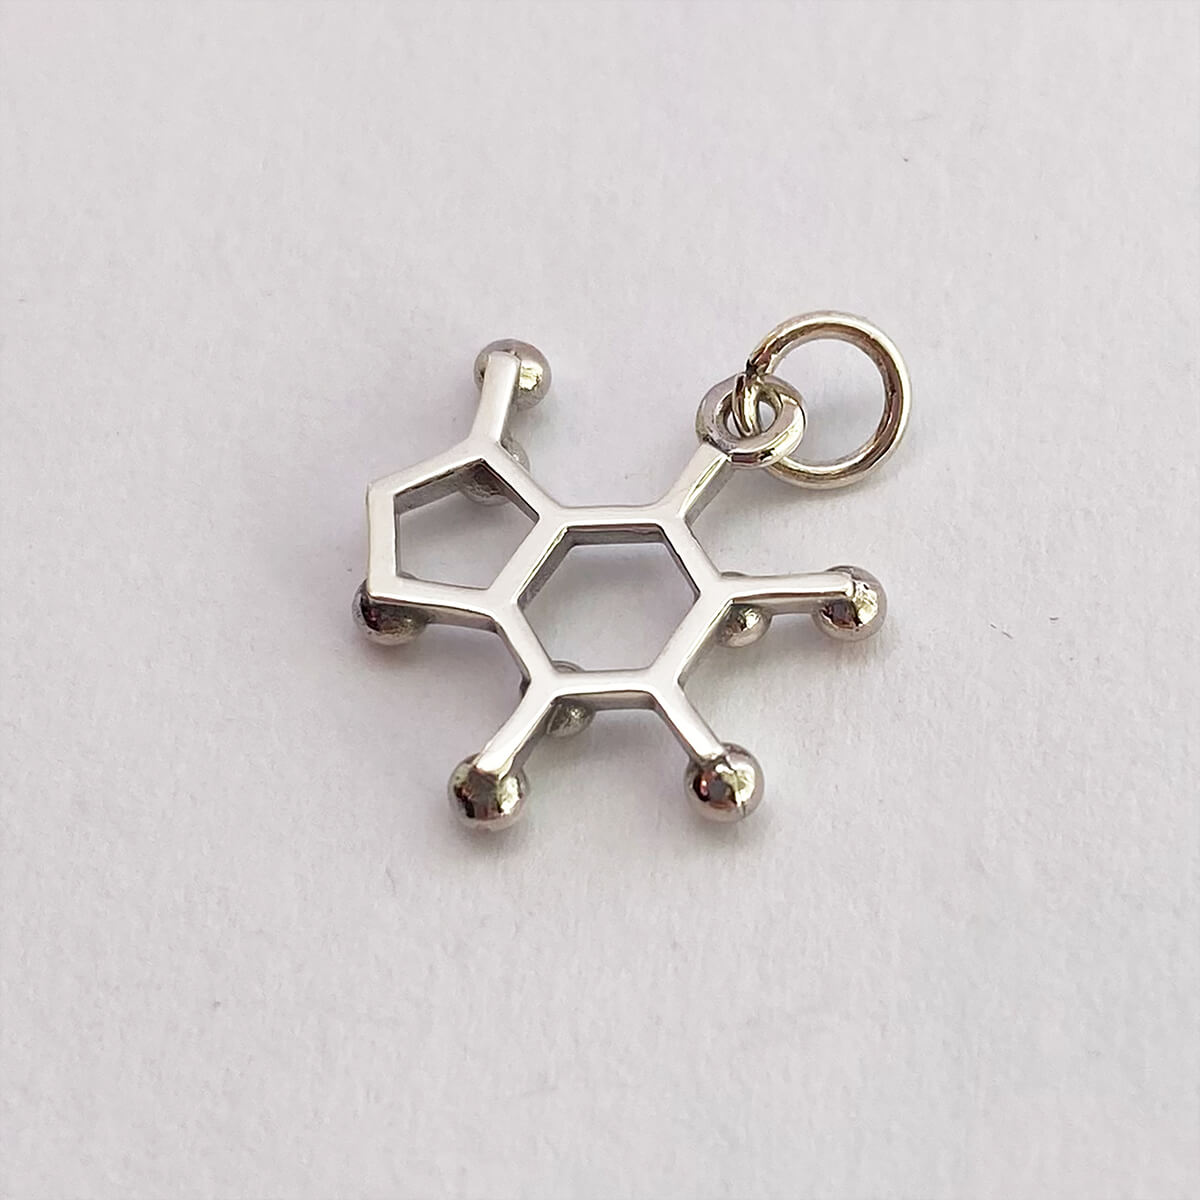 Molecule charm sterling silver science pendant